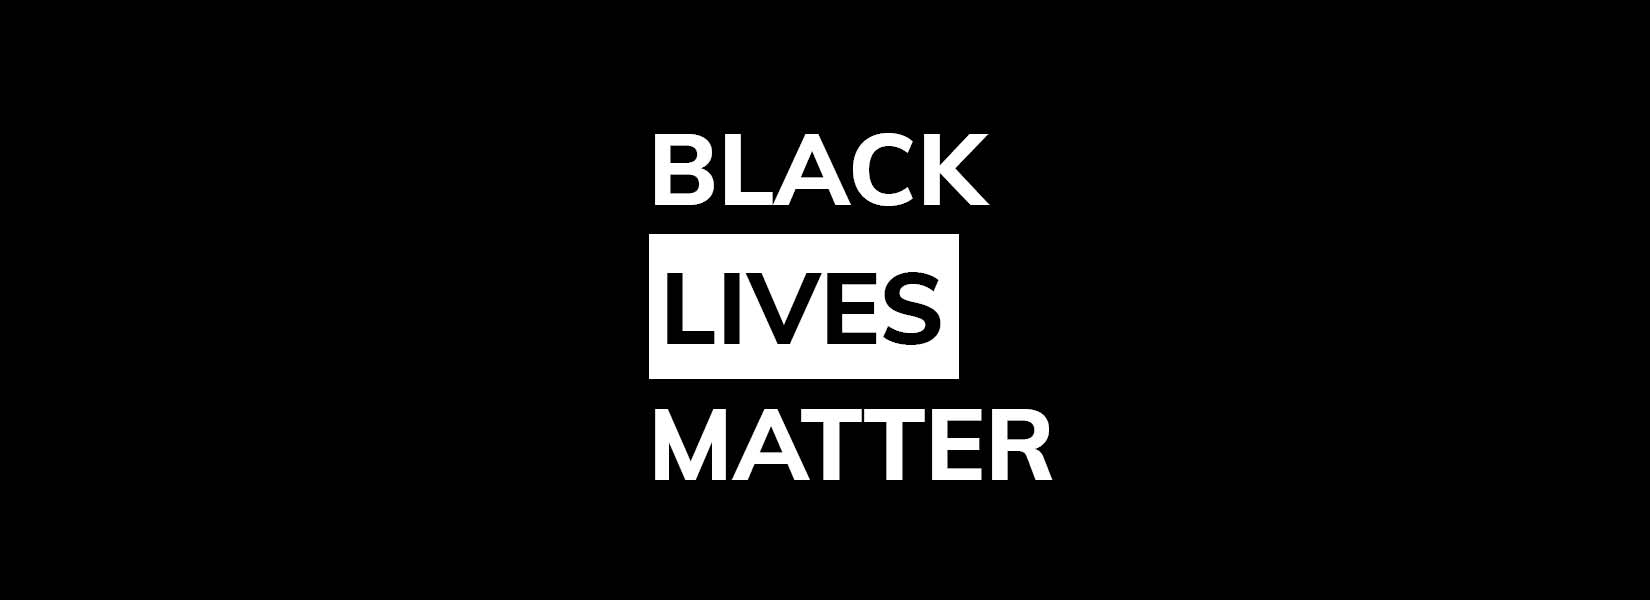 Black lives matter slider